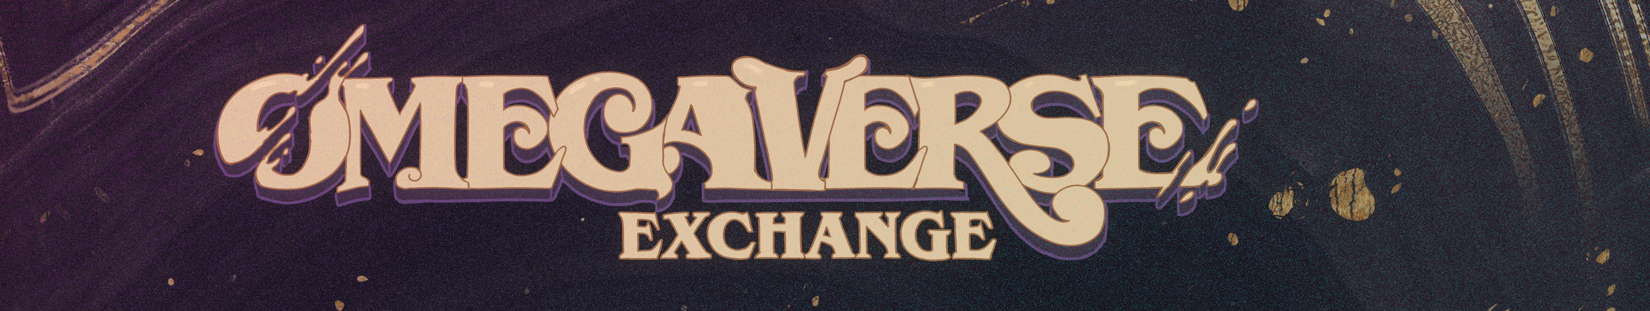 Omegaverse Exchange 2021 Banner